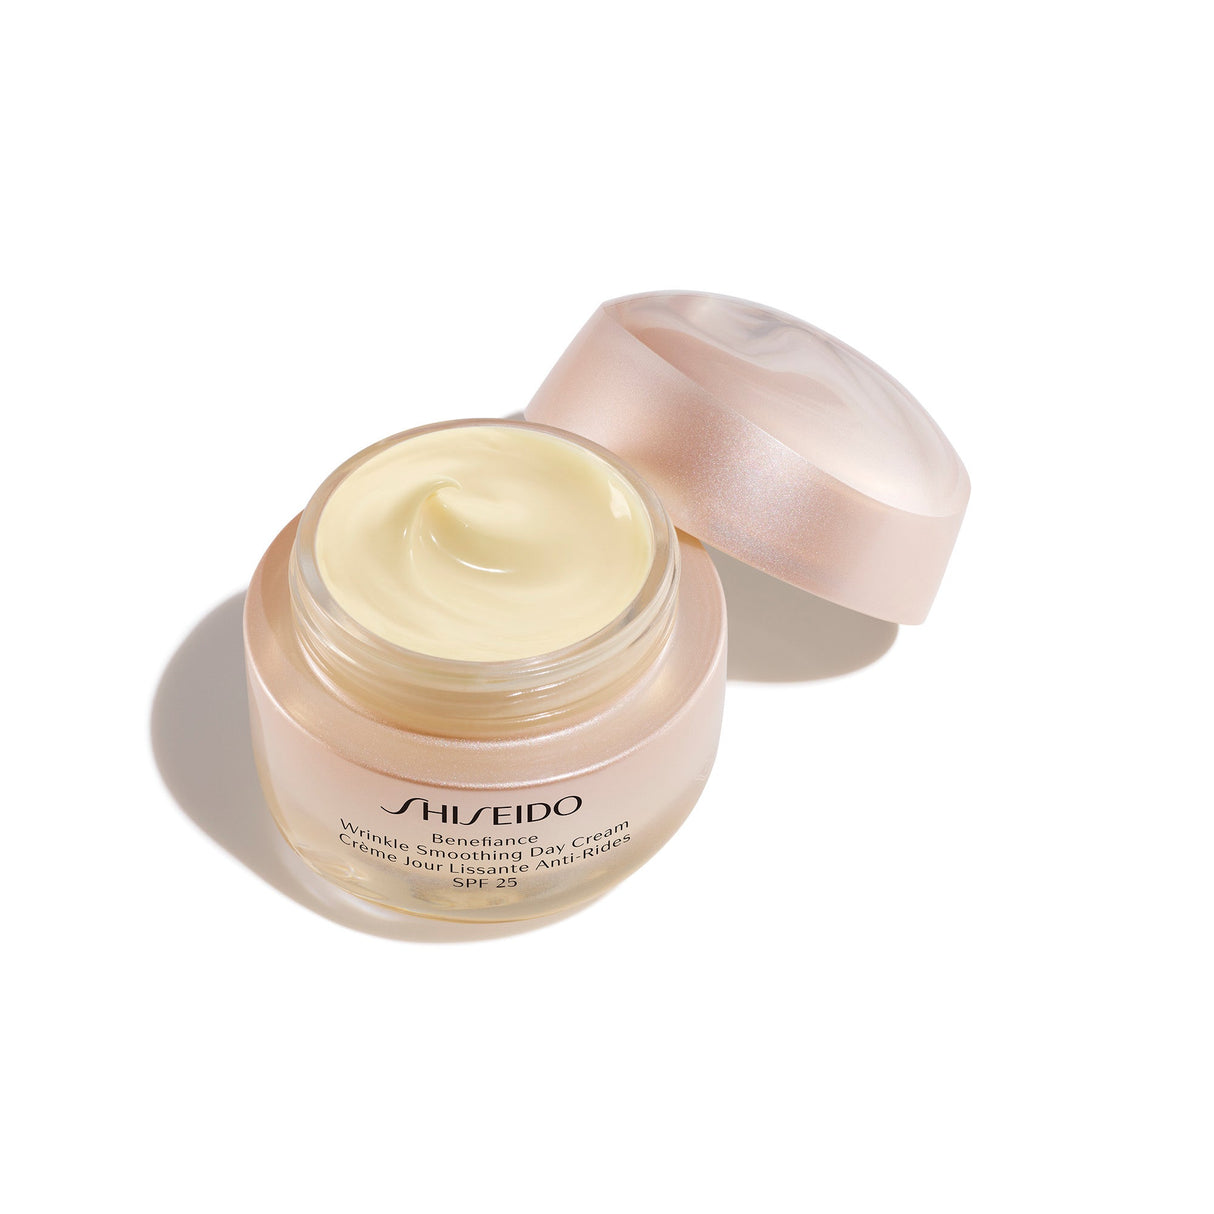 Benefiance Wrinkle Smoothing Day Cream SPF23-Shiseido